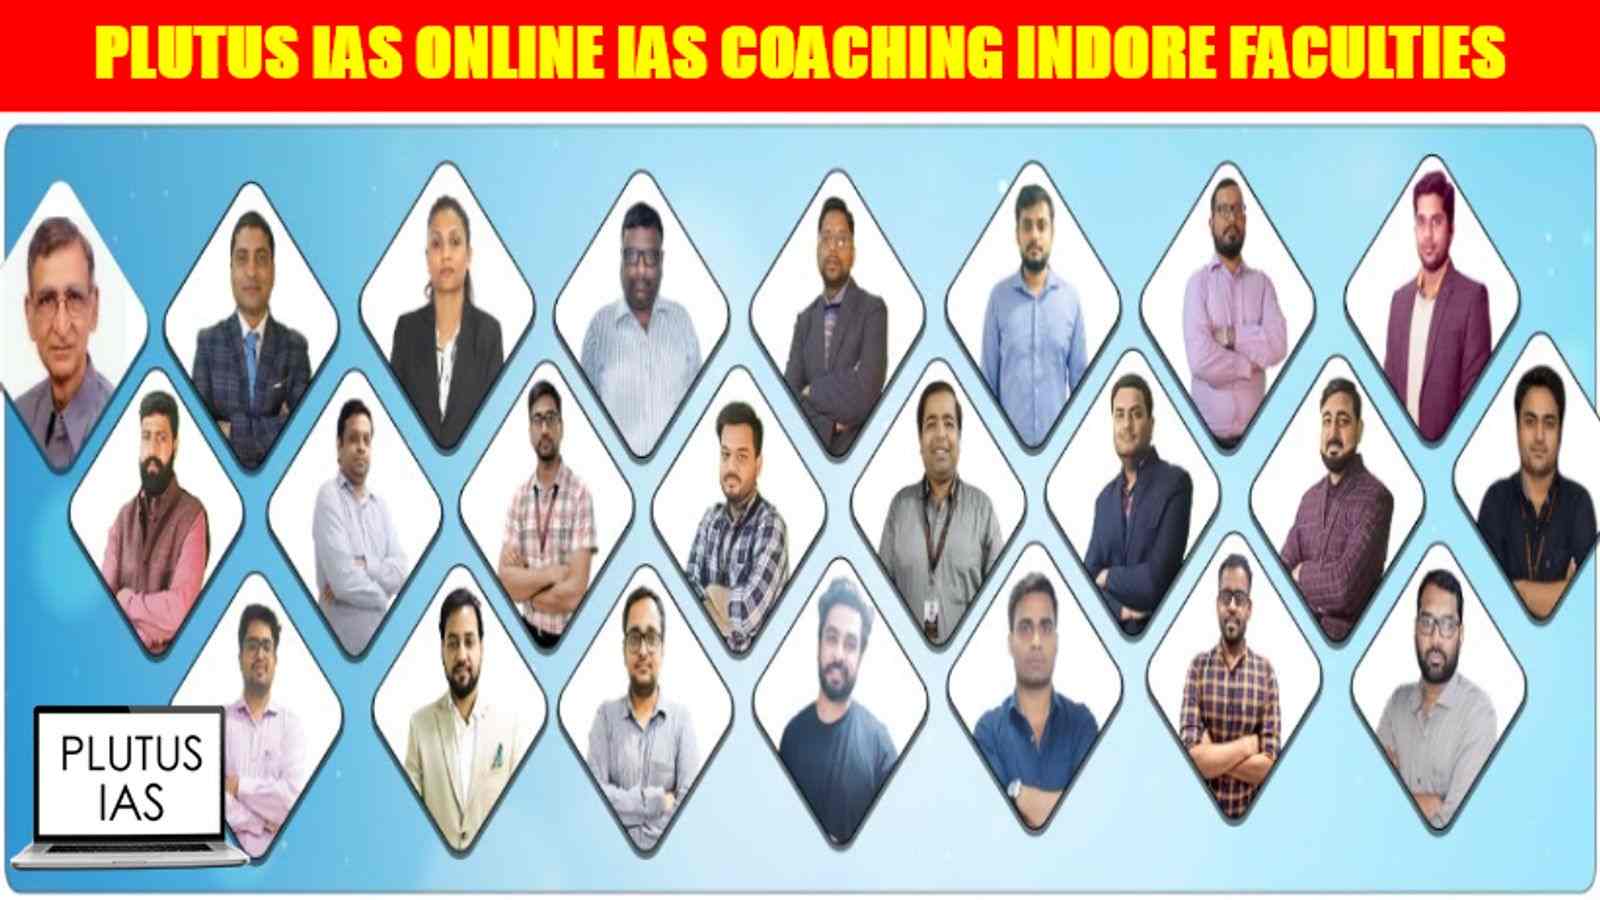 Plutus IAS Online Coaching Indore Faculties